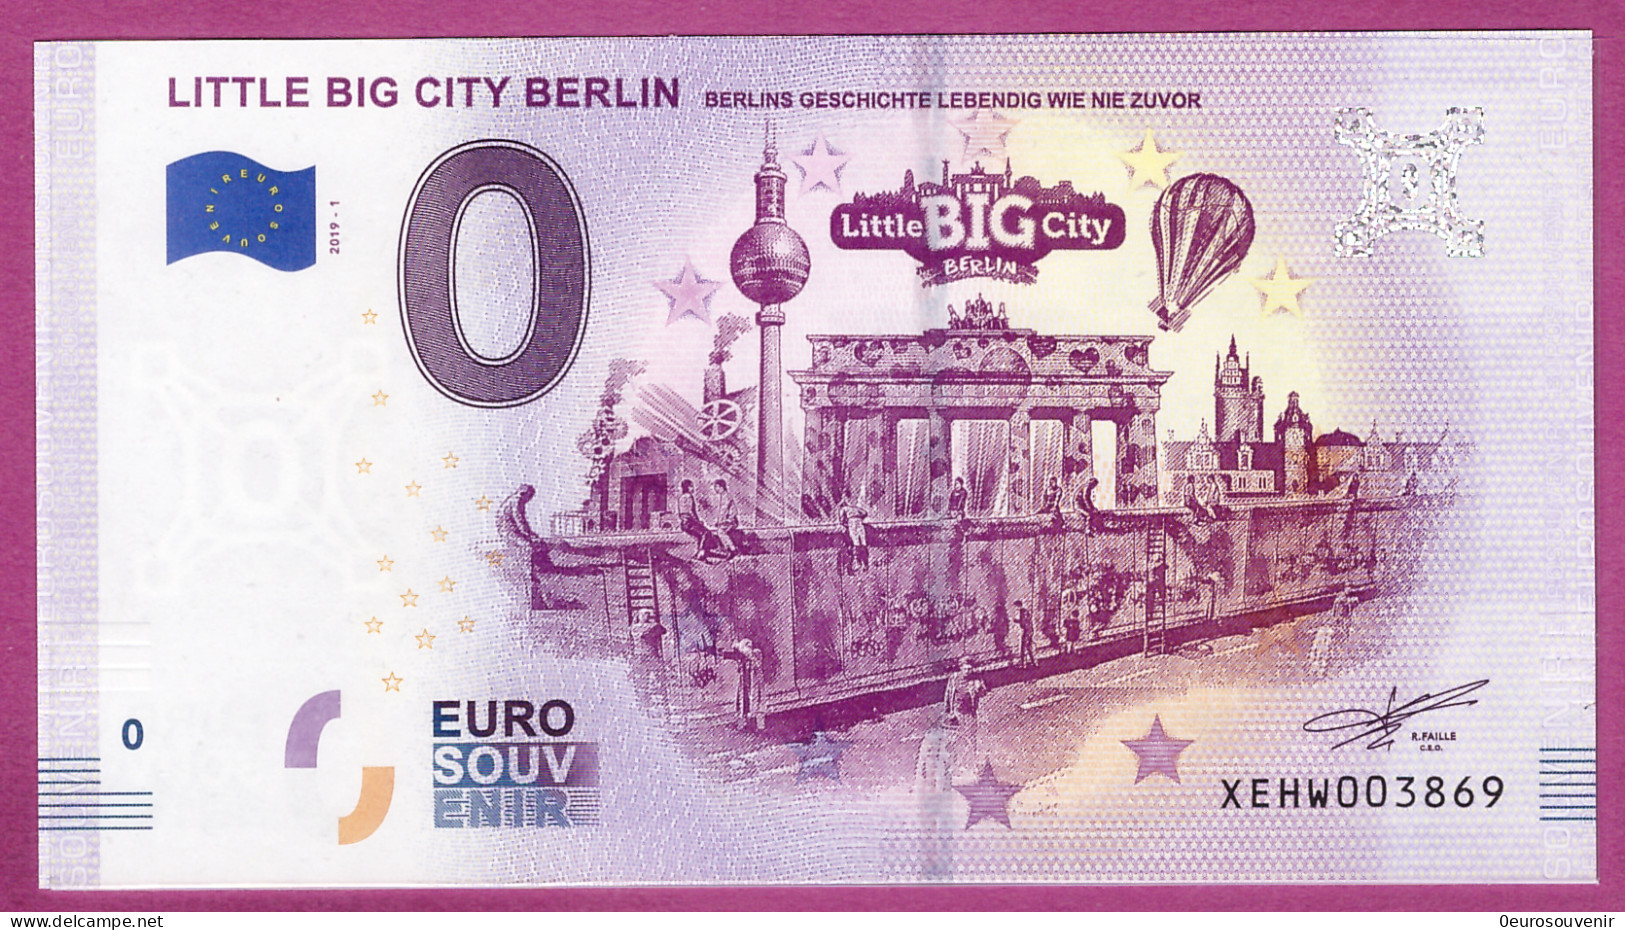 0-Euro XEHW 2019-1 LITTLE BIG CITY BERLIN - BERLINS GESCHICHTE LEBENDIG WIE NIE ZUVOR - Privatentwürfe